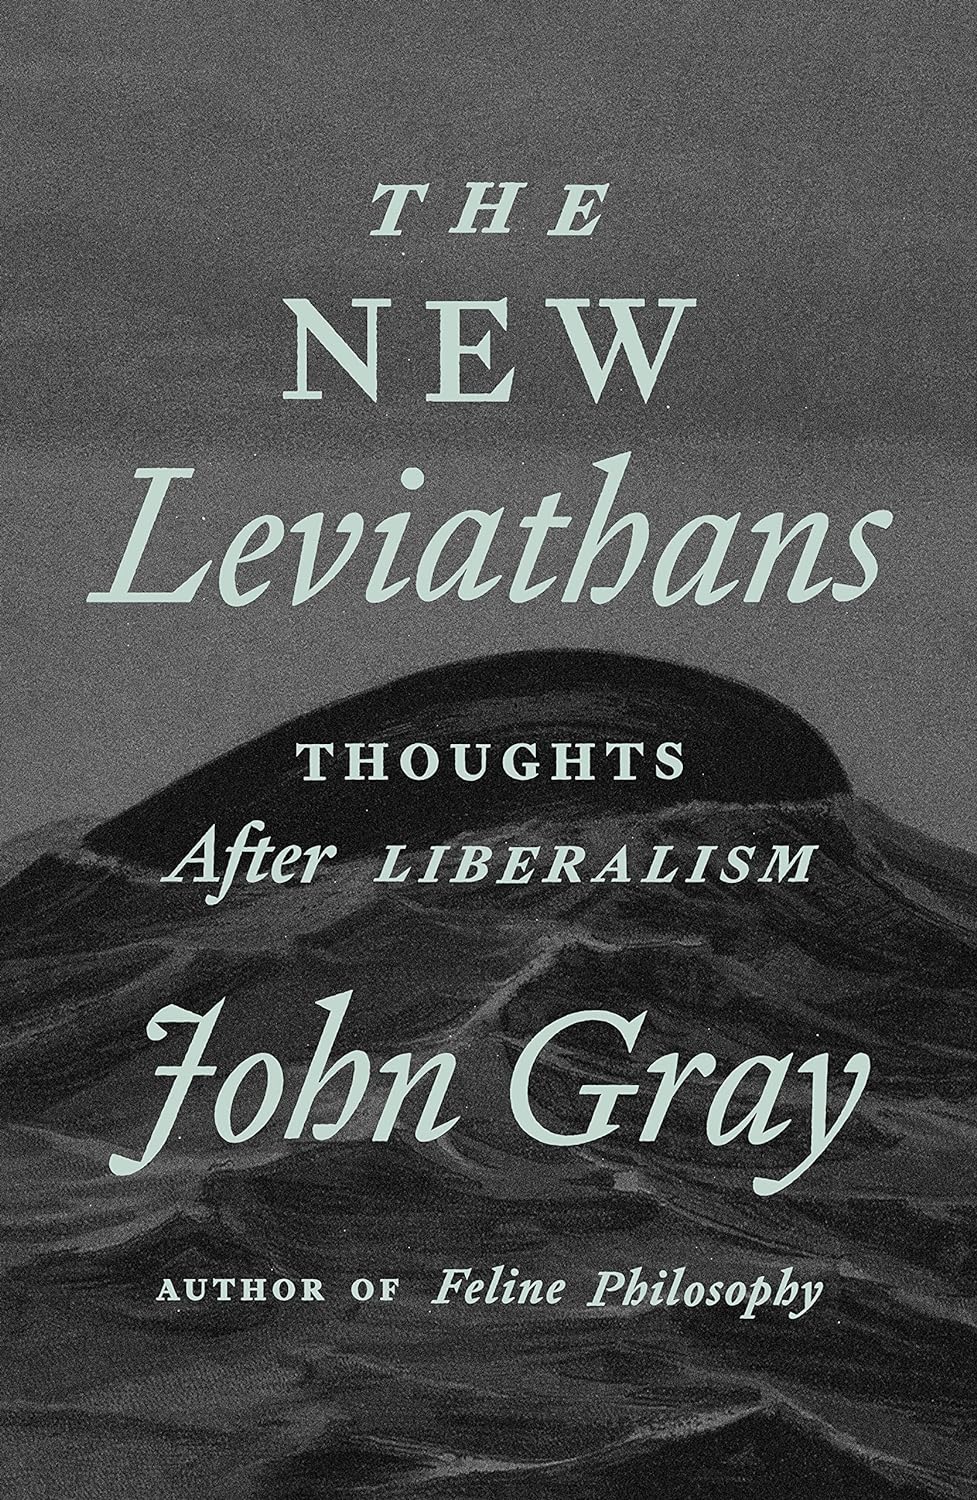 John Gray, New Leviathans book cover